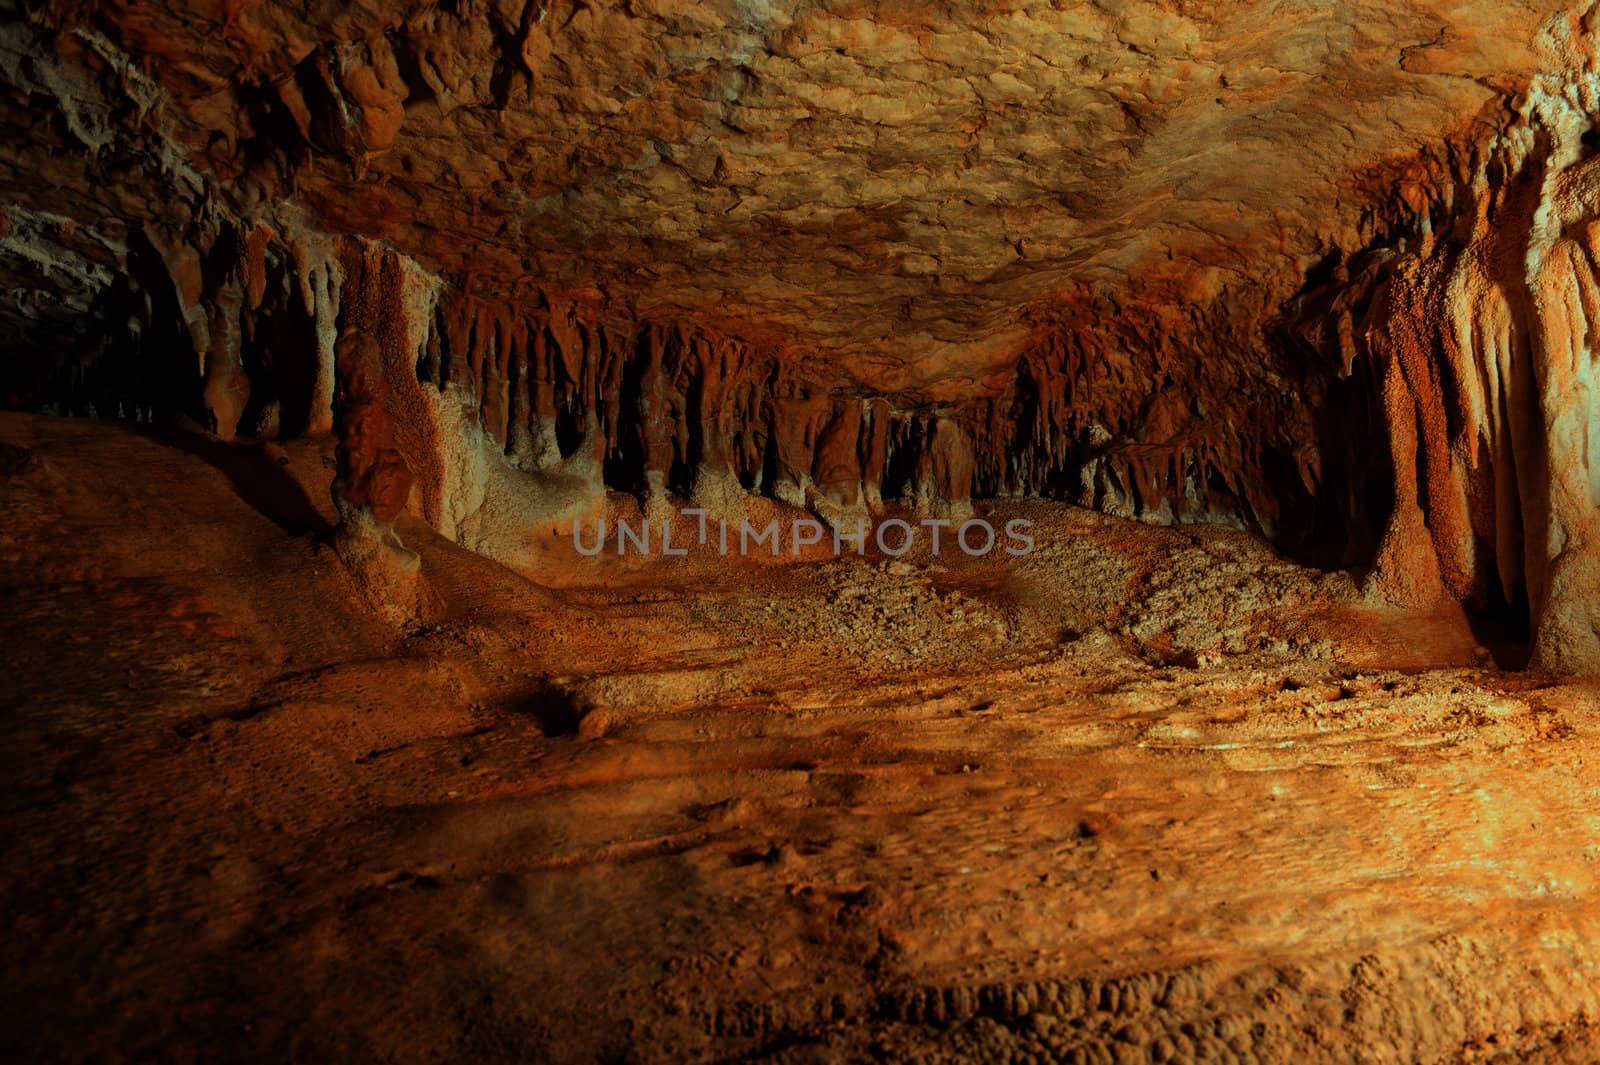 Cave in Crimea, Ukraine by Emevil